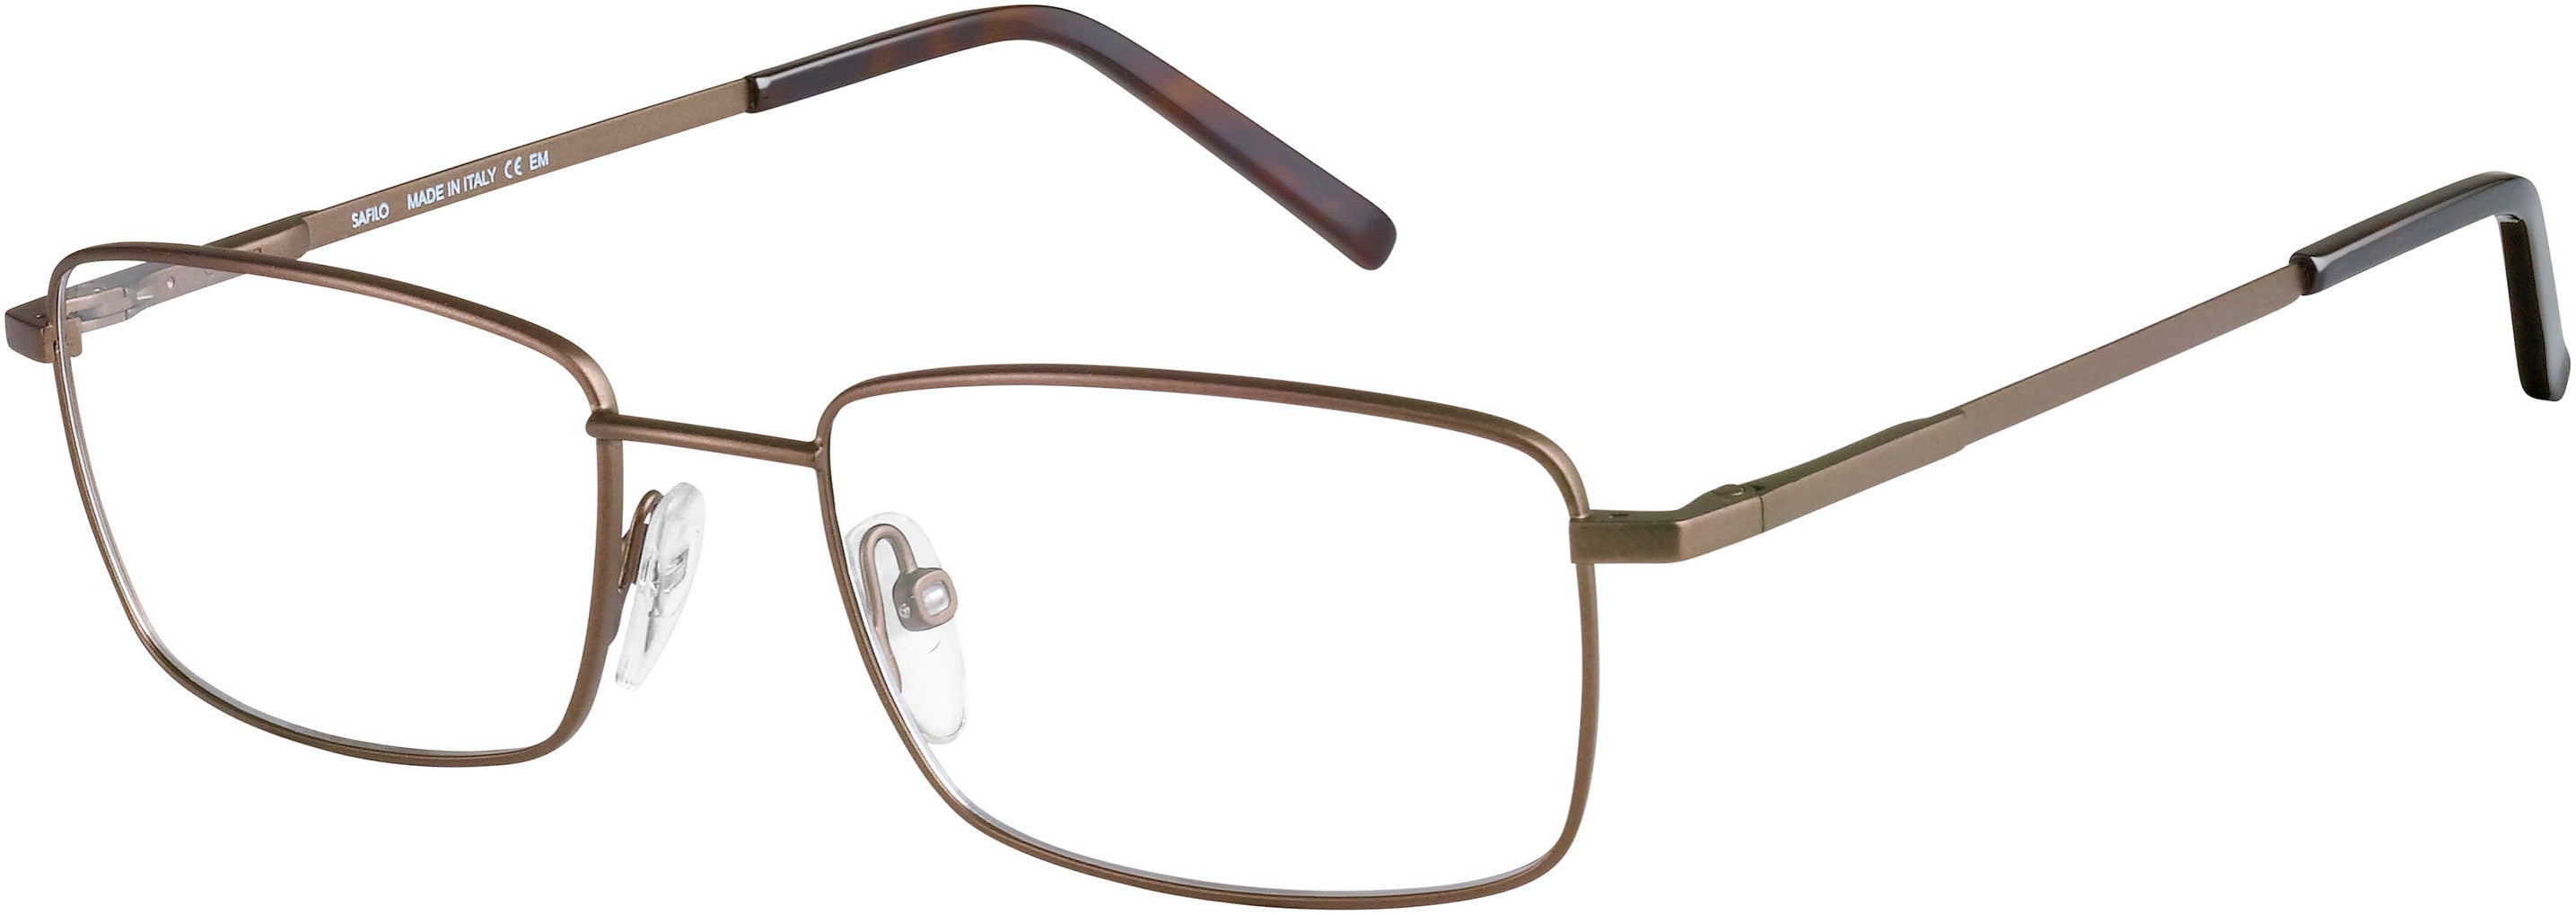  Elasta 7217 Rectangular Eyeglasses 04IN-04IN  Matte Brown (00 Demo Lens)